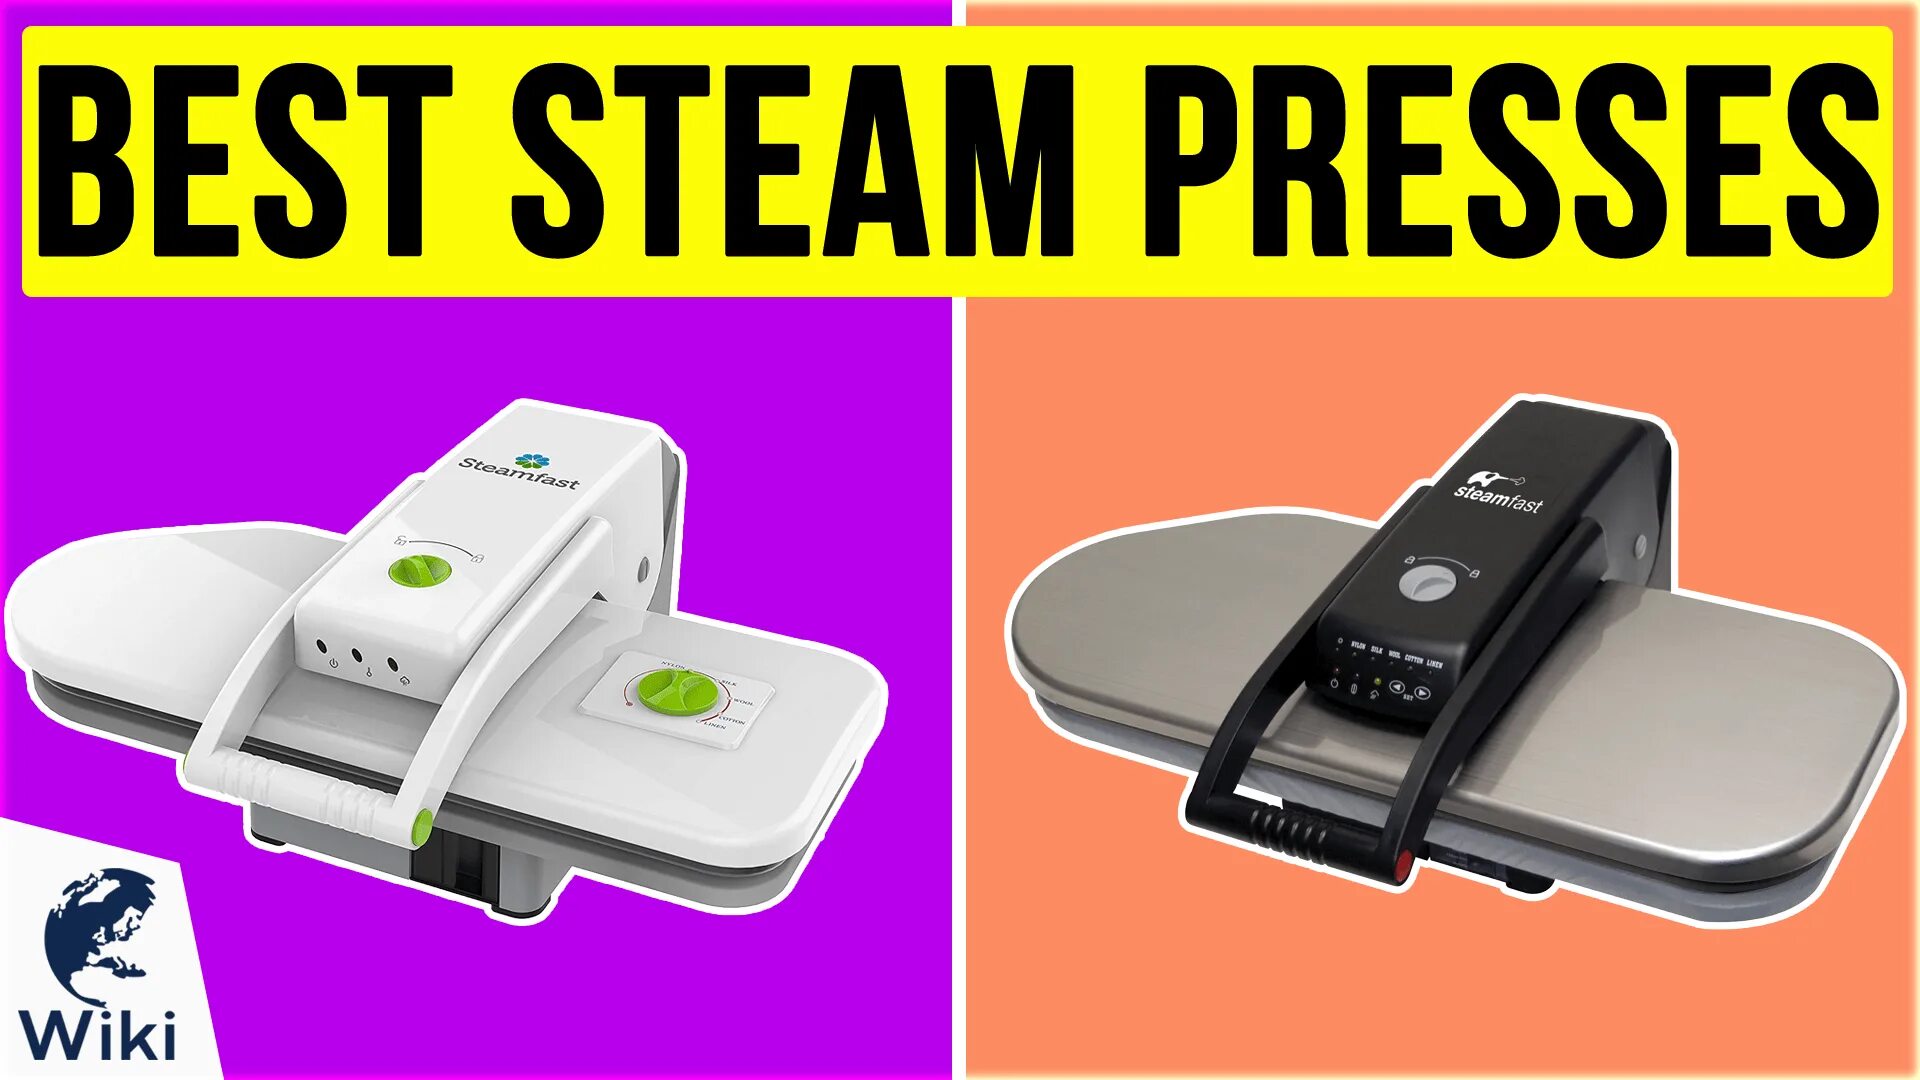 Steam Press. Steam Iron Box package. Steam pressing apparatus. Press list. Good press